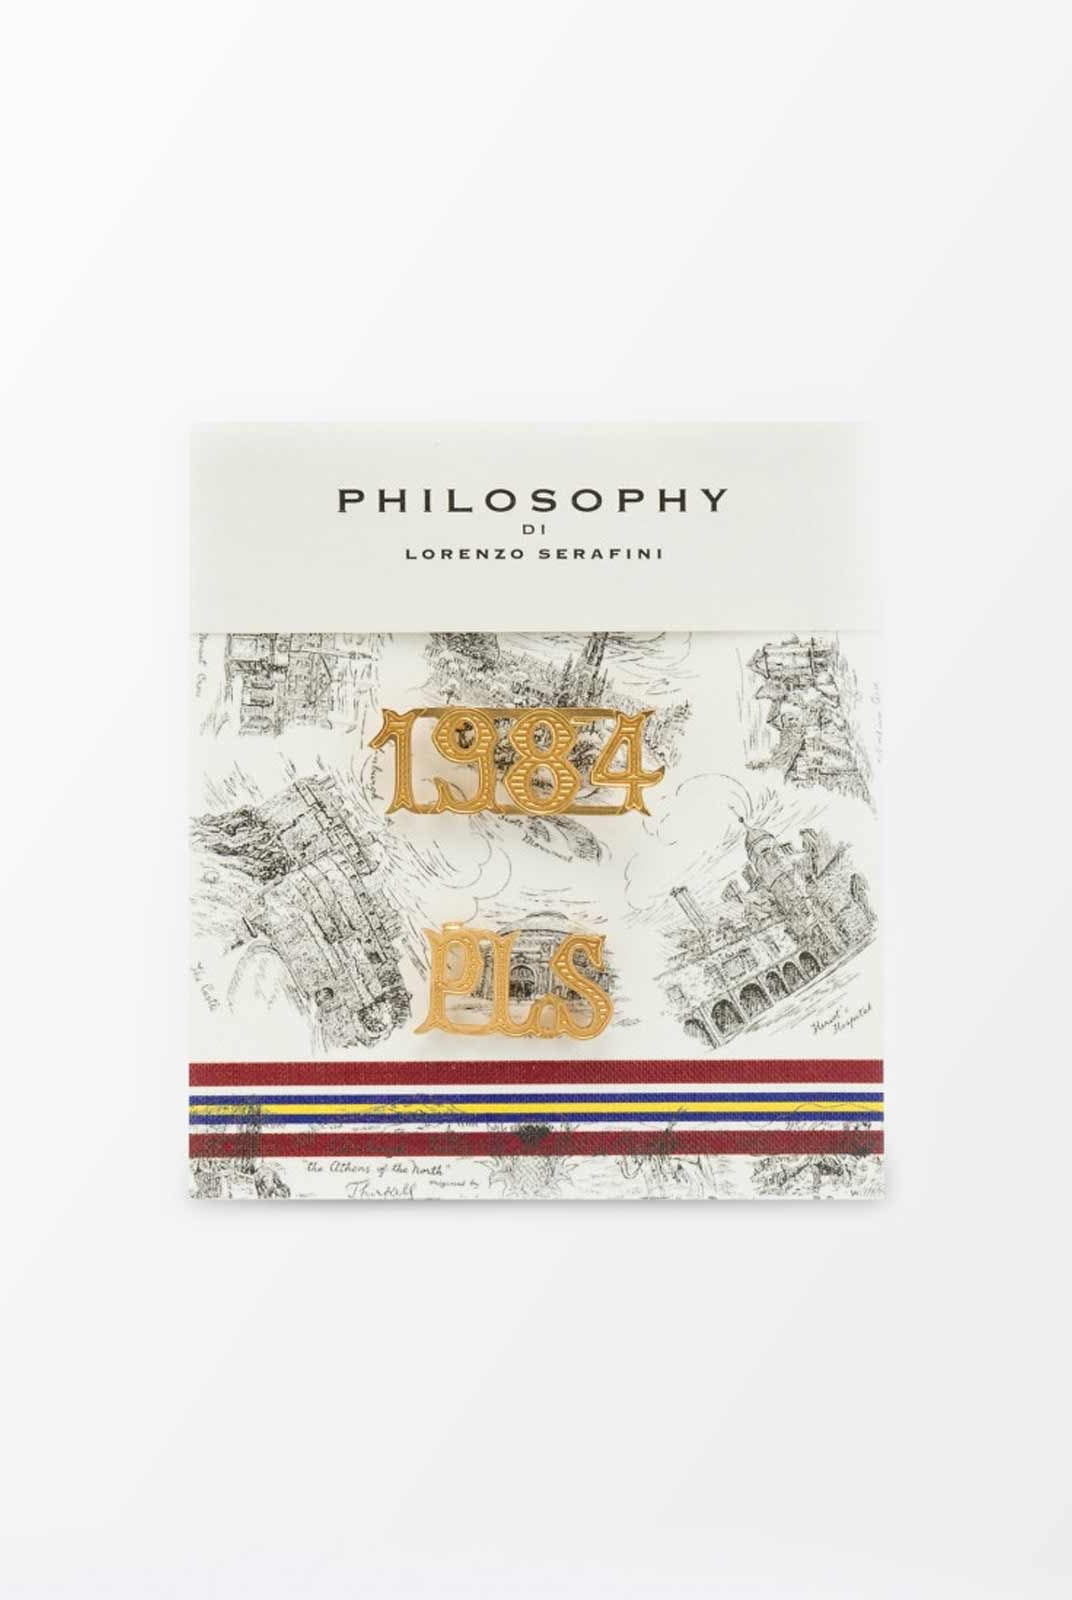 Spille 1984 e pls oro- Philosophy -Giorgioquinto